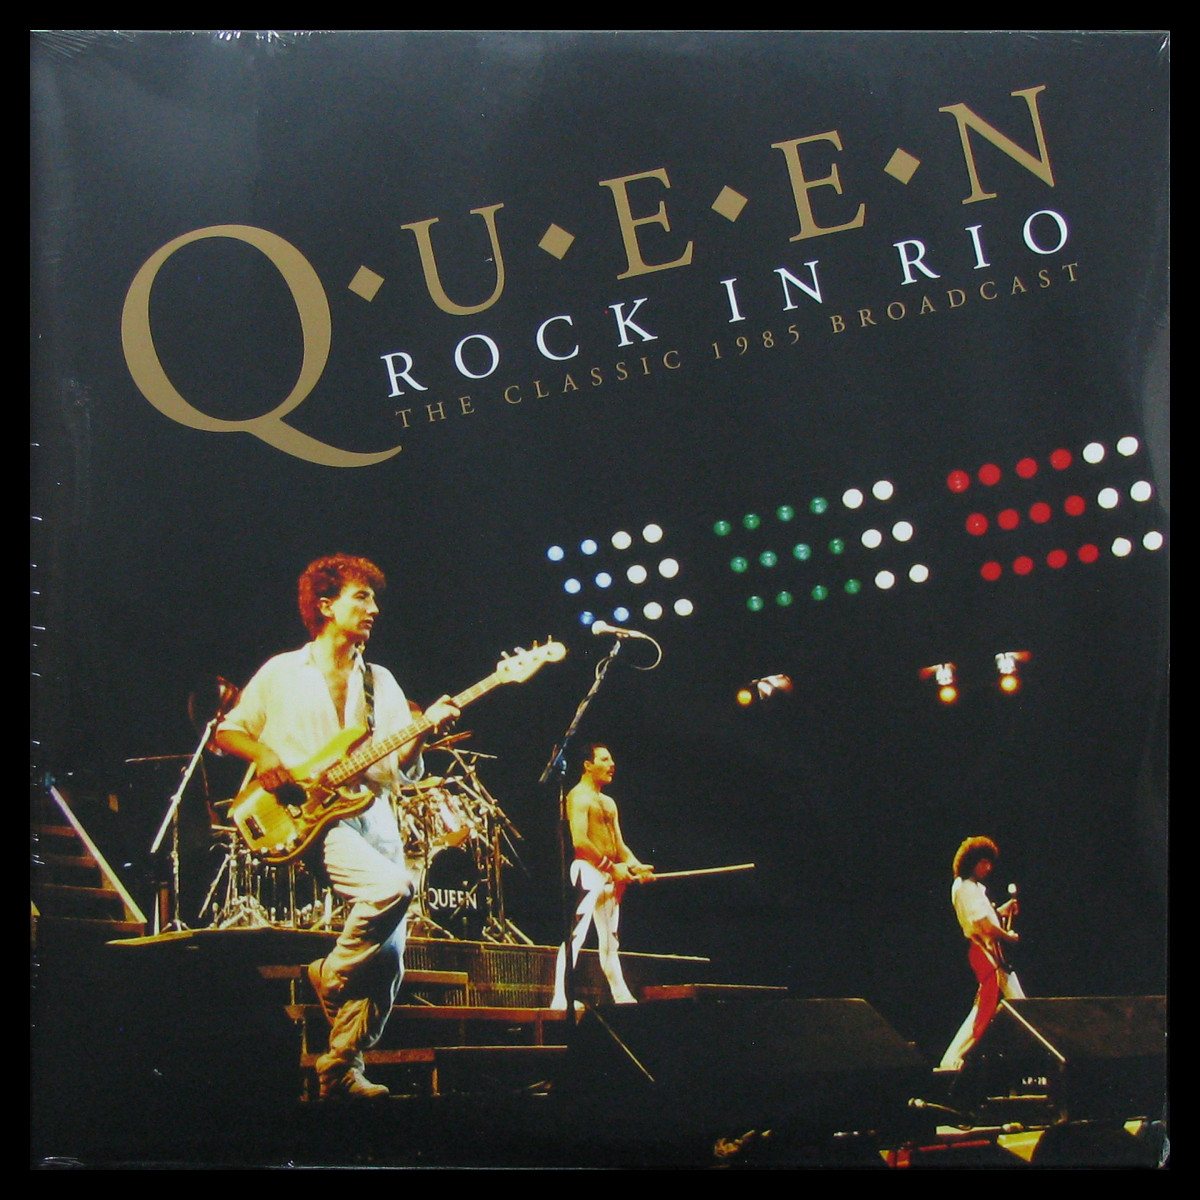 LP Queen — Rock In Rio The Classic 1985 Broadcast (2LP, coloured vinyl) фото